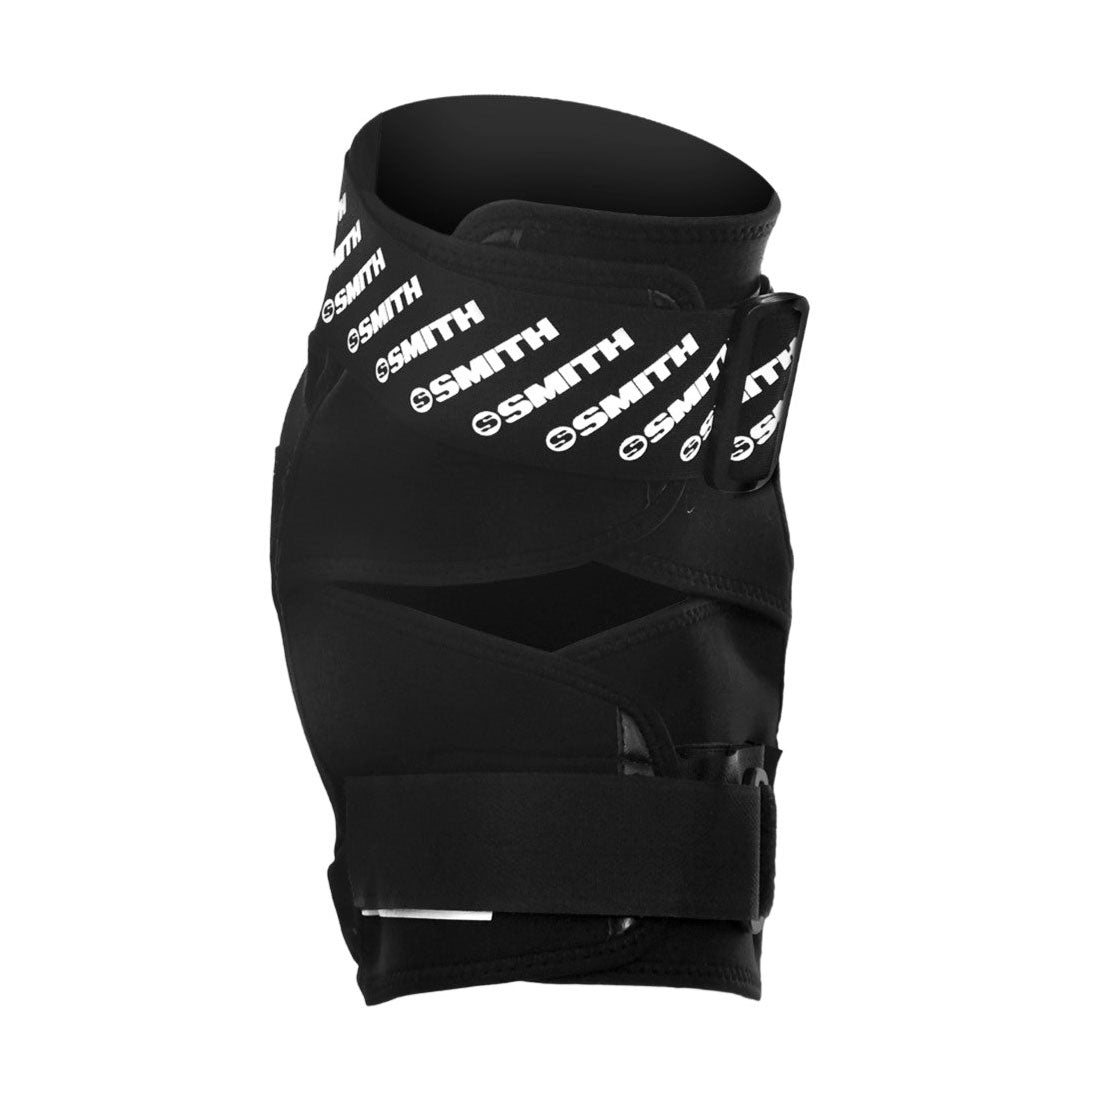 Smith Scabs Elite 2 Knee - Black/White Protective Gear